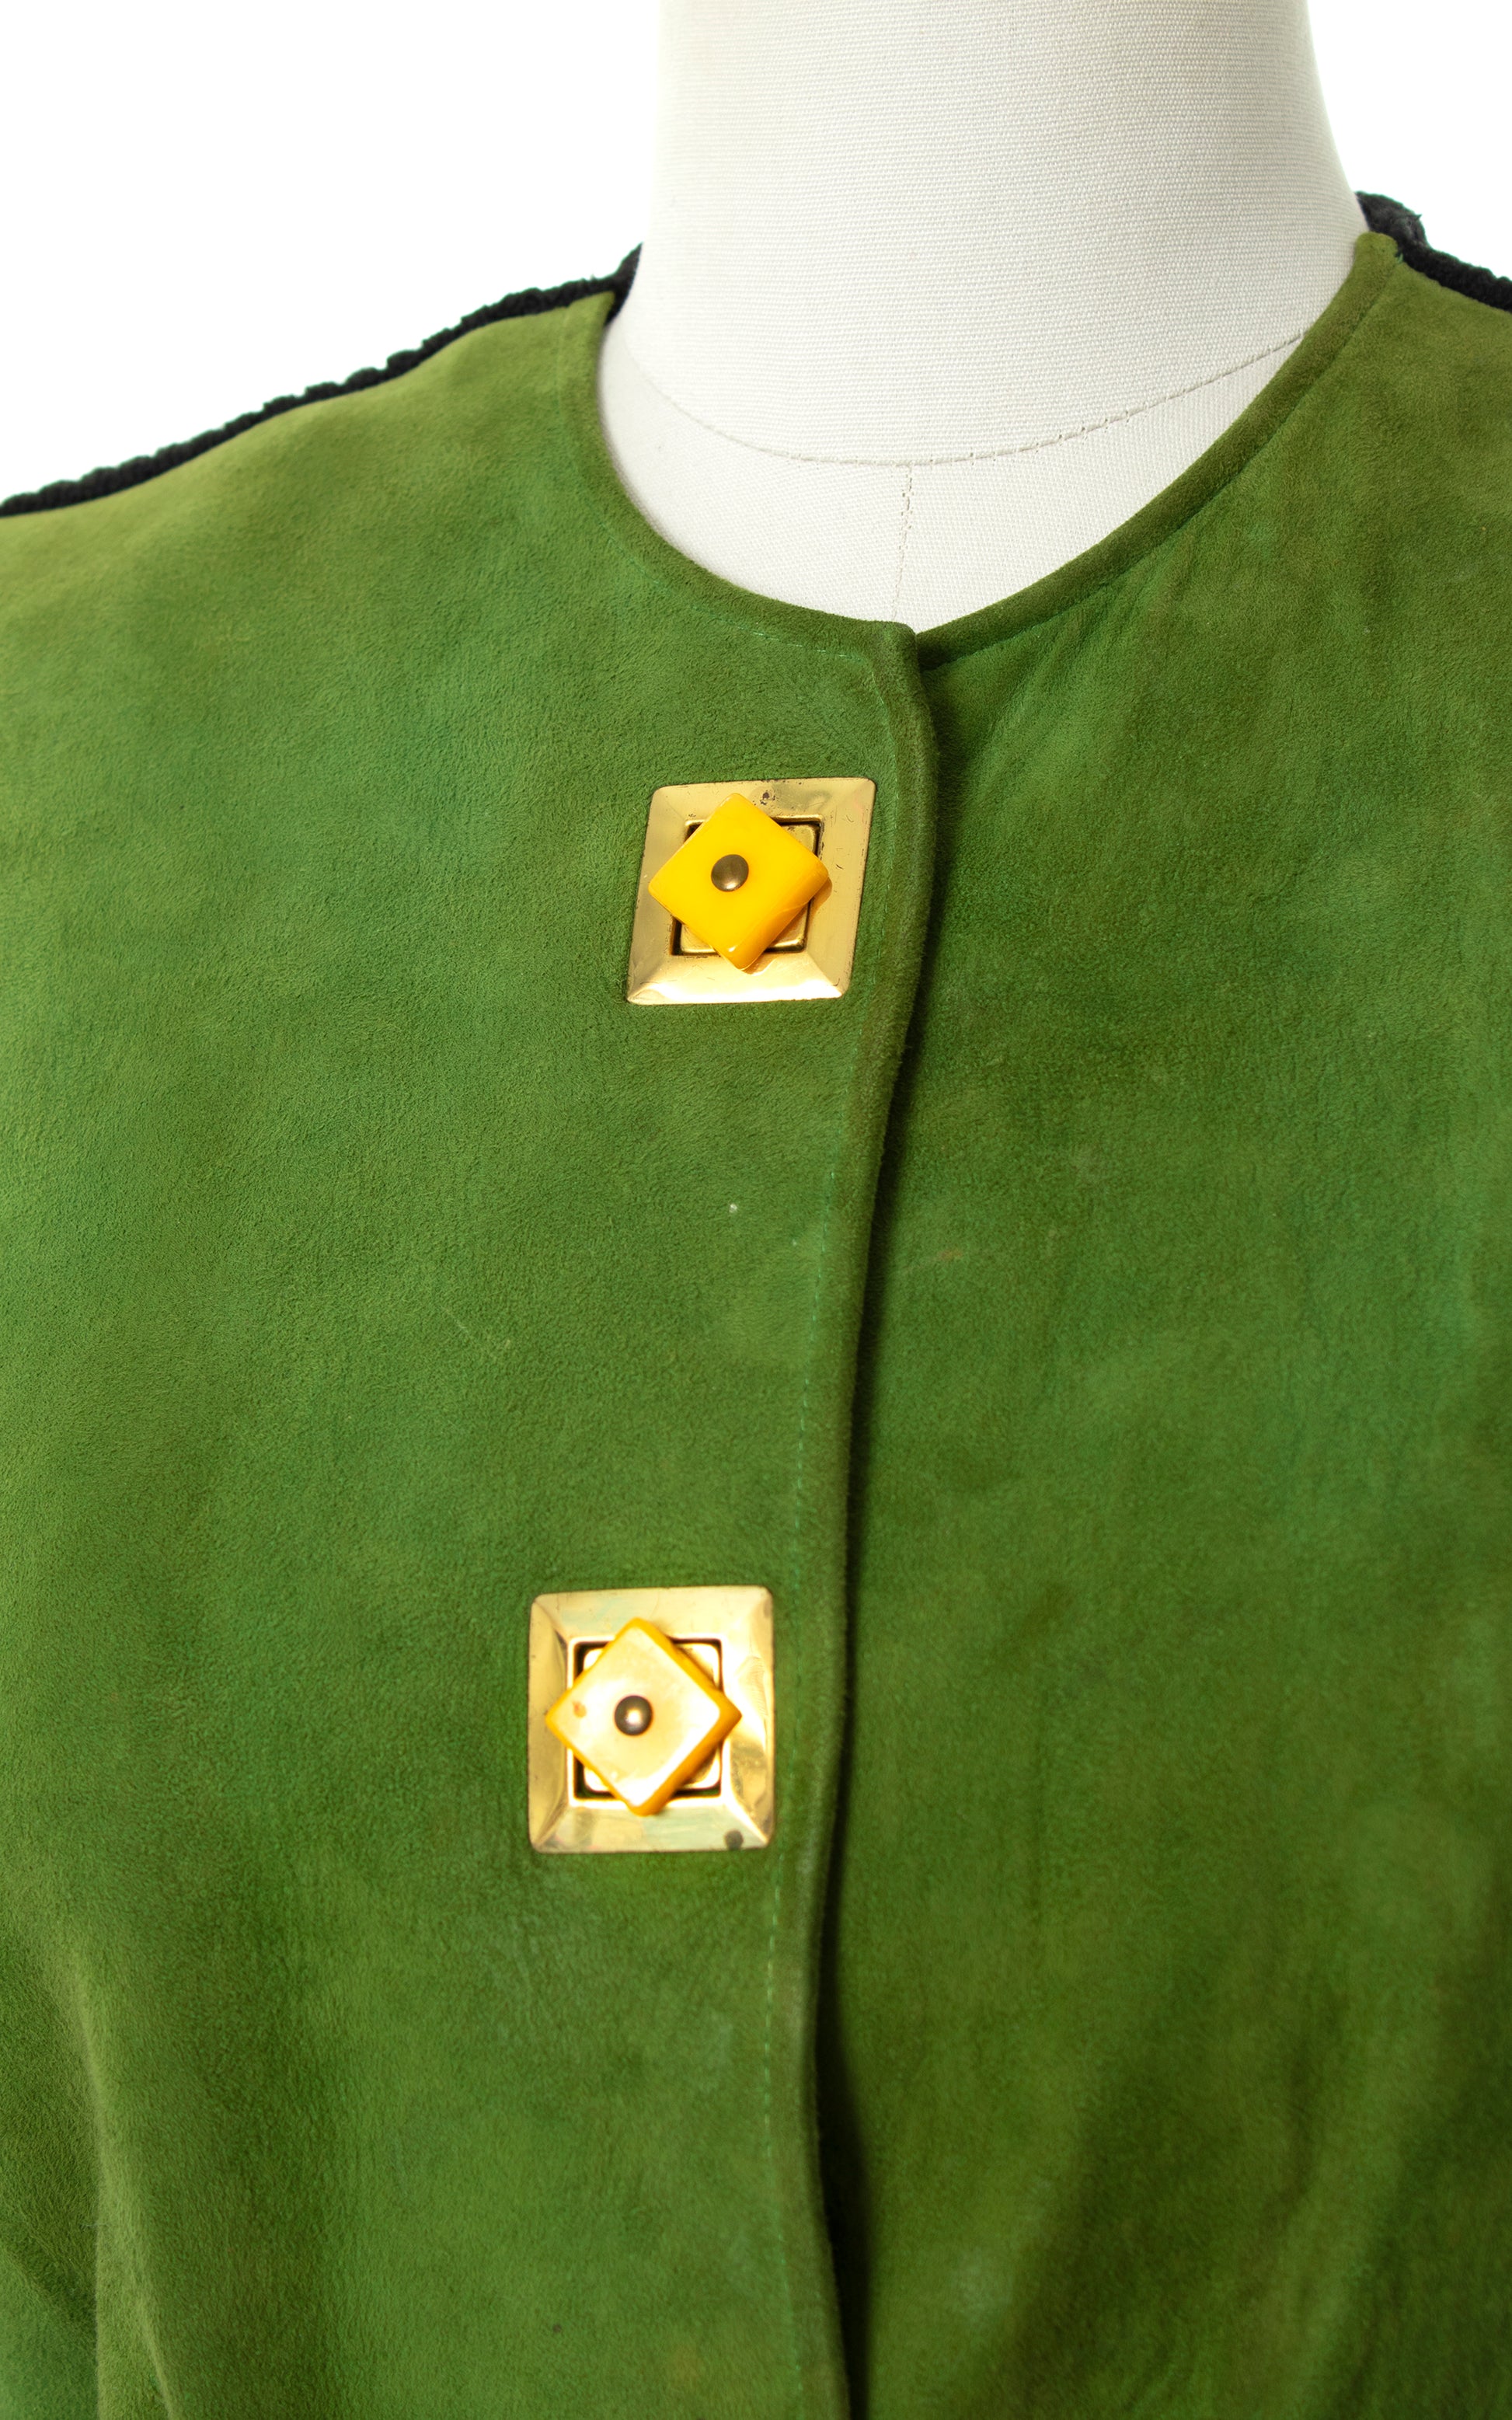 Vintage 1930s 30s SPORTIGAN Green Suede & Black Knit Wool Sweater Jacket Birthday Life Vintage